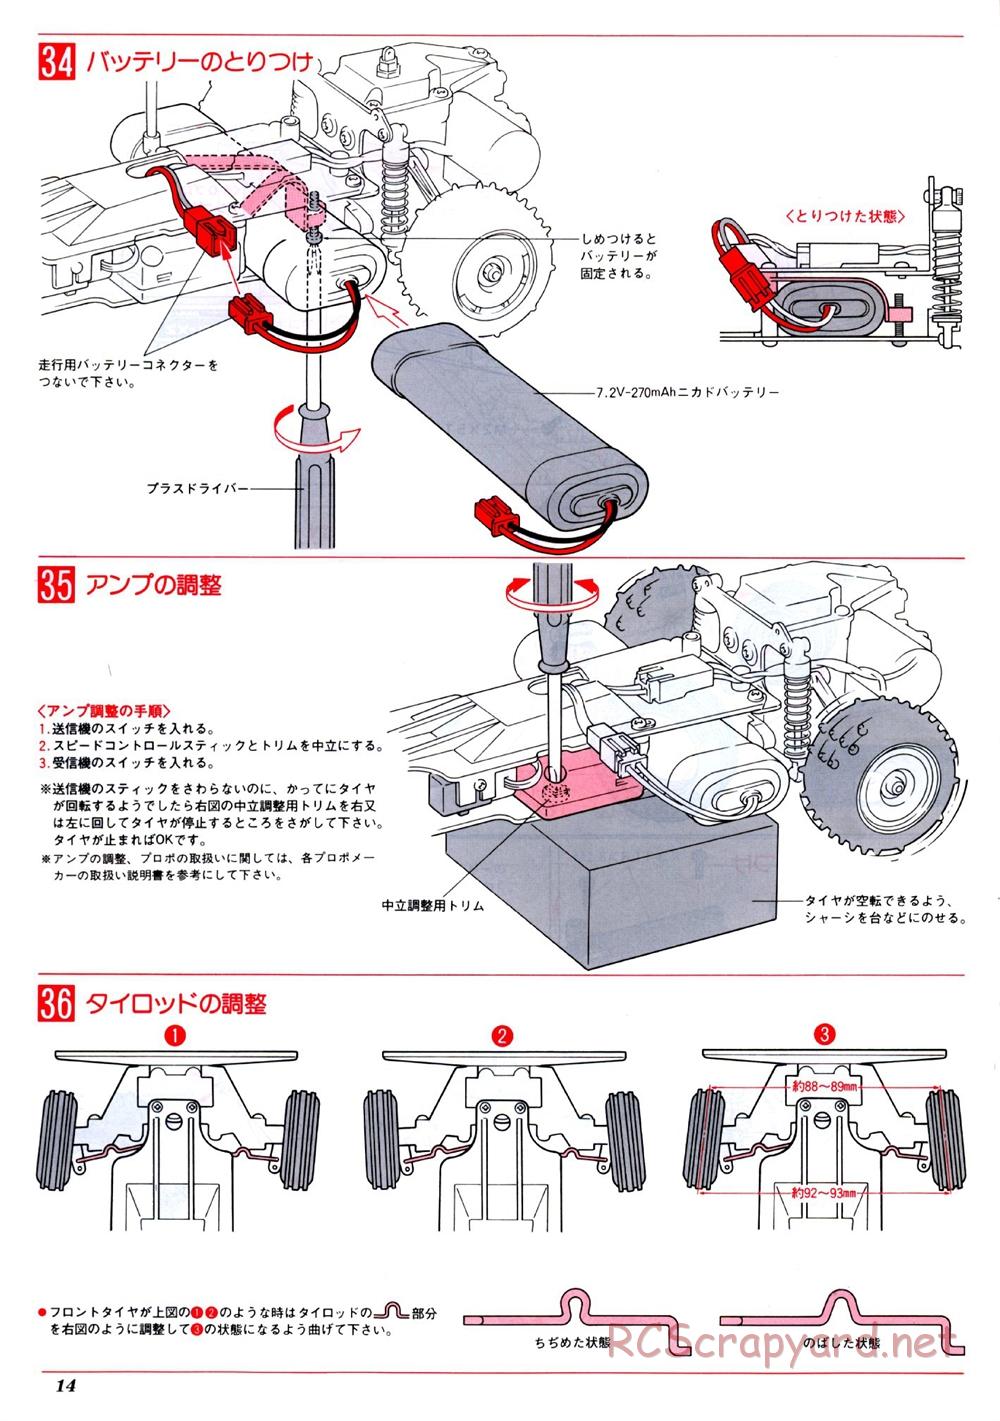 Kyosho - Baja Bugs - Turbo Optima 2WD - Manual - Page 14